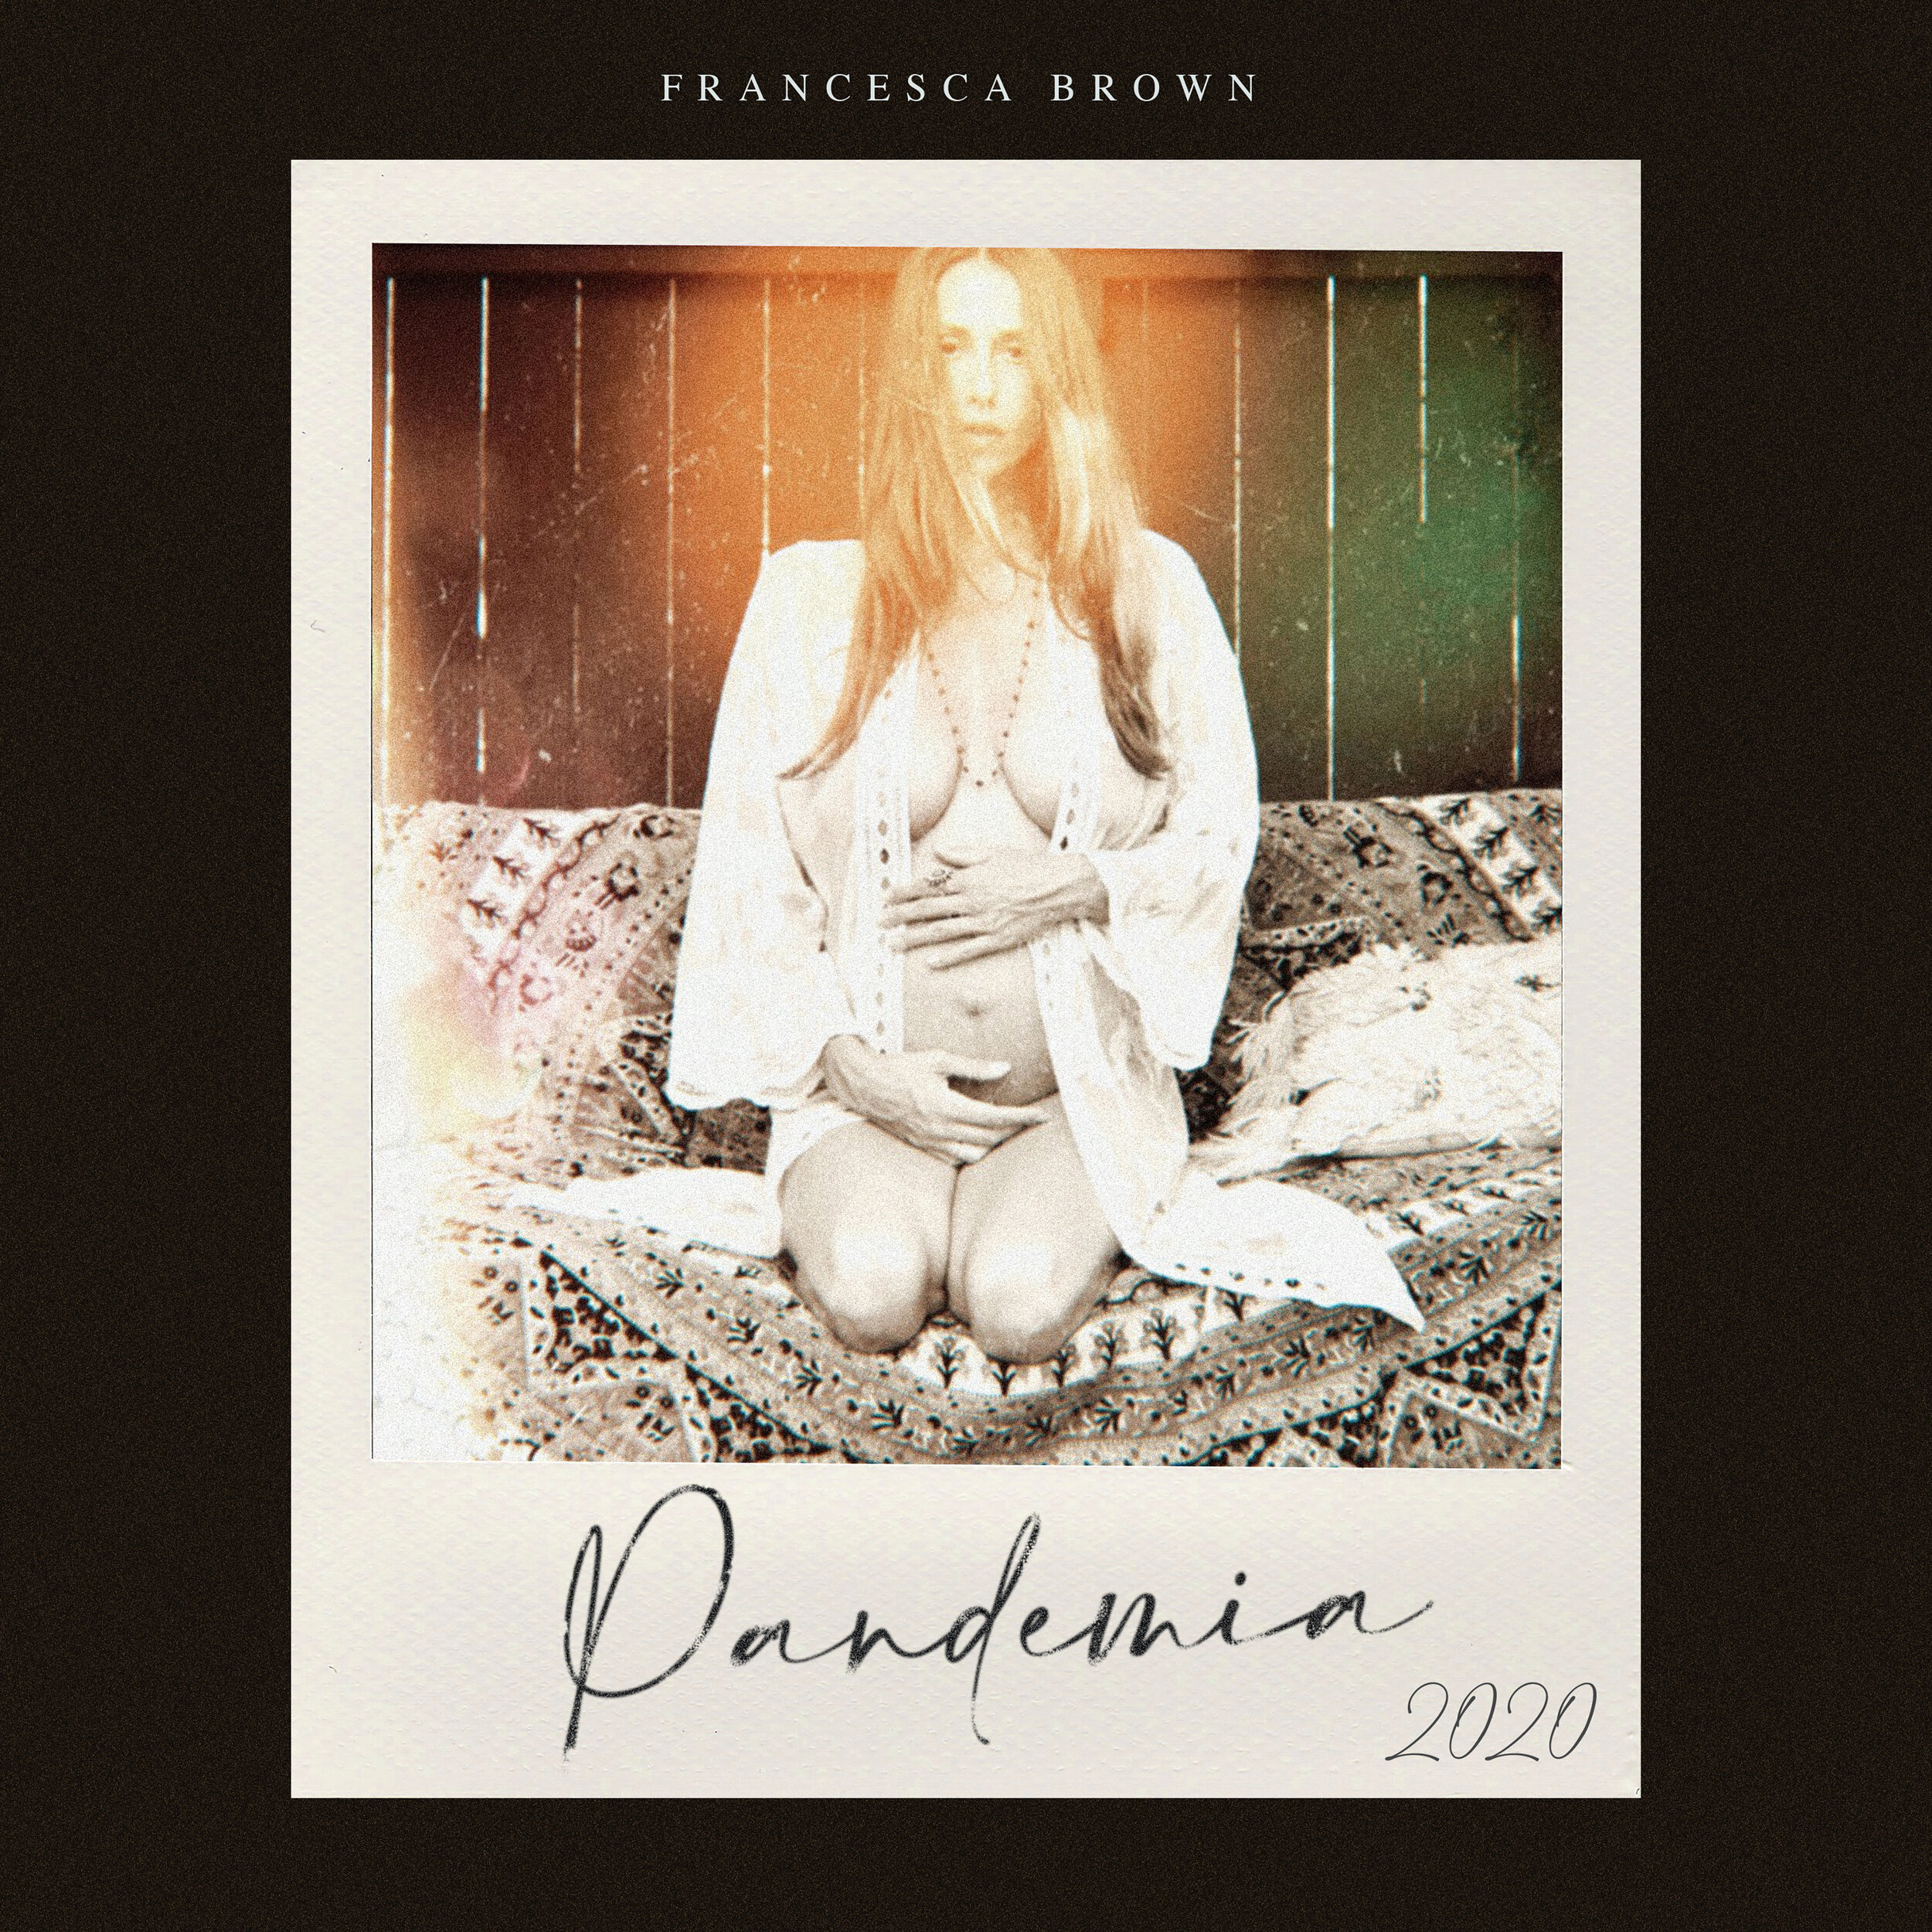 Francesca Brown - Pandemia